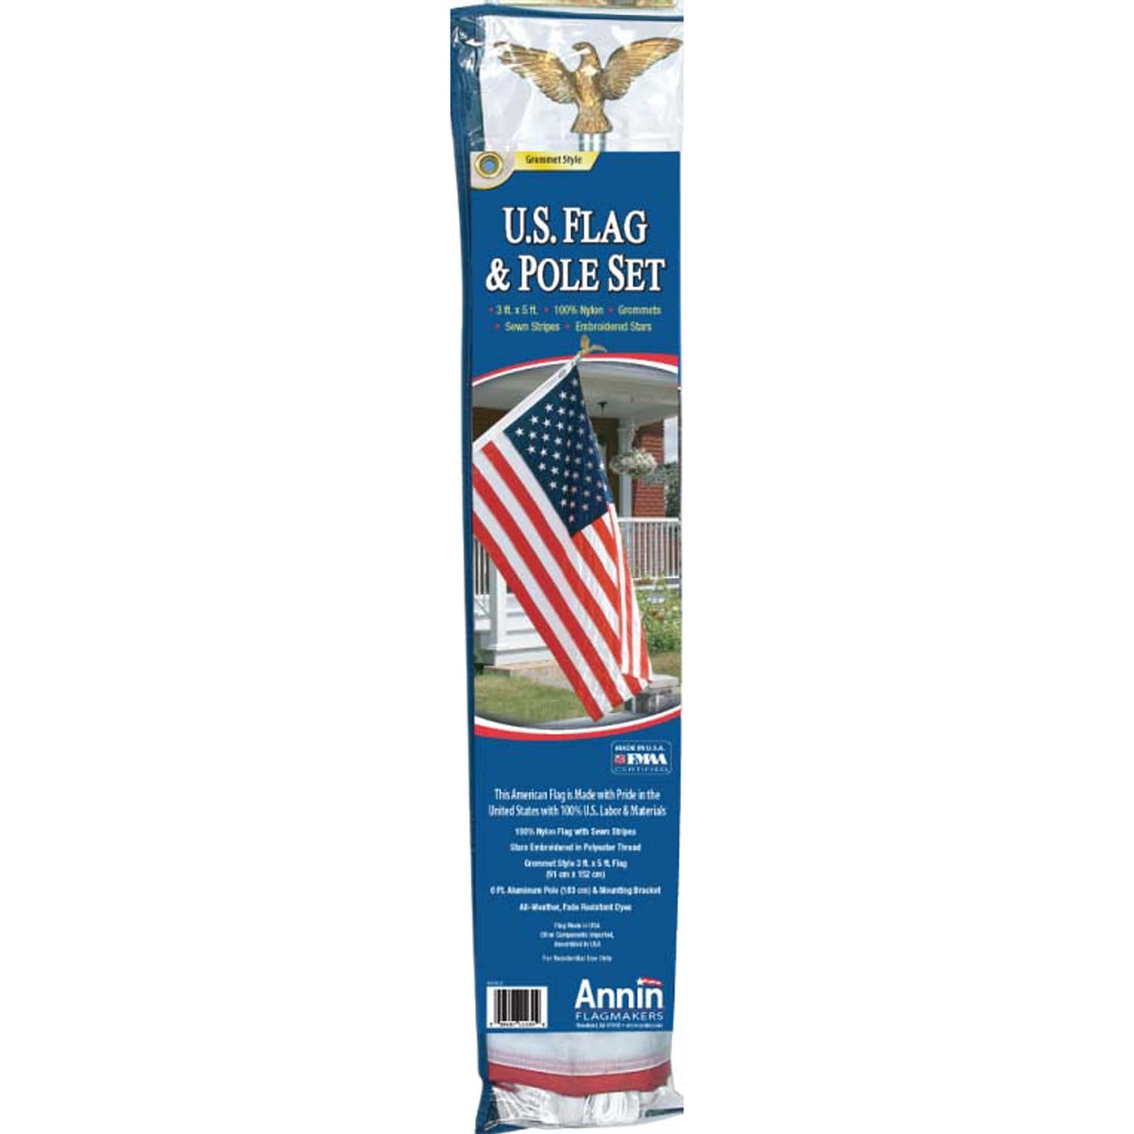 Annin Nylon U.S. Flag & Pole Deluxe Set - Image 1 of 2